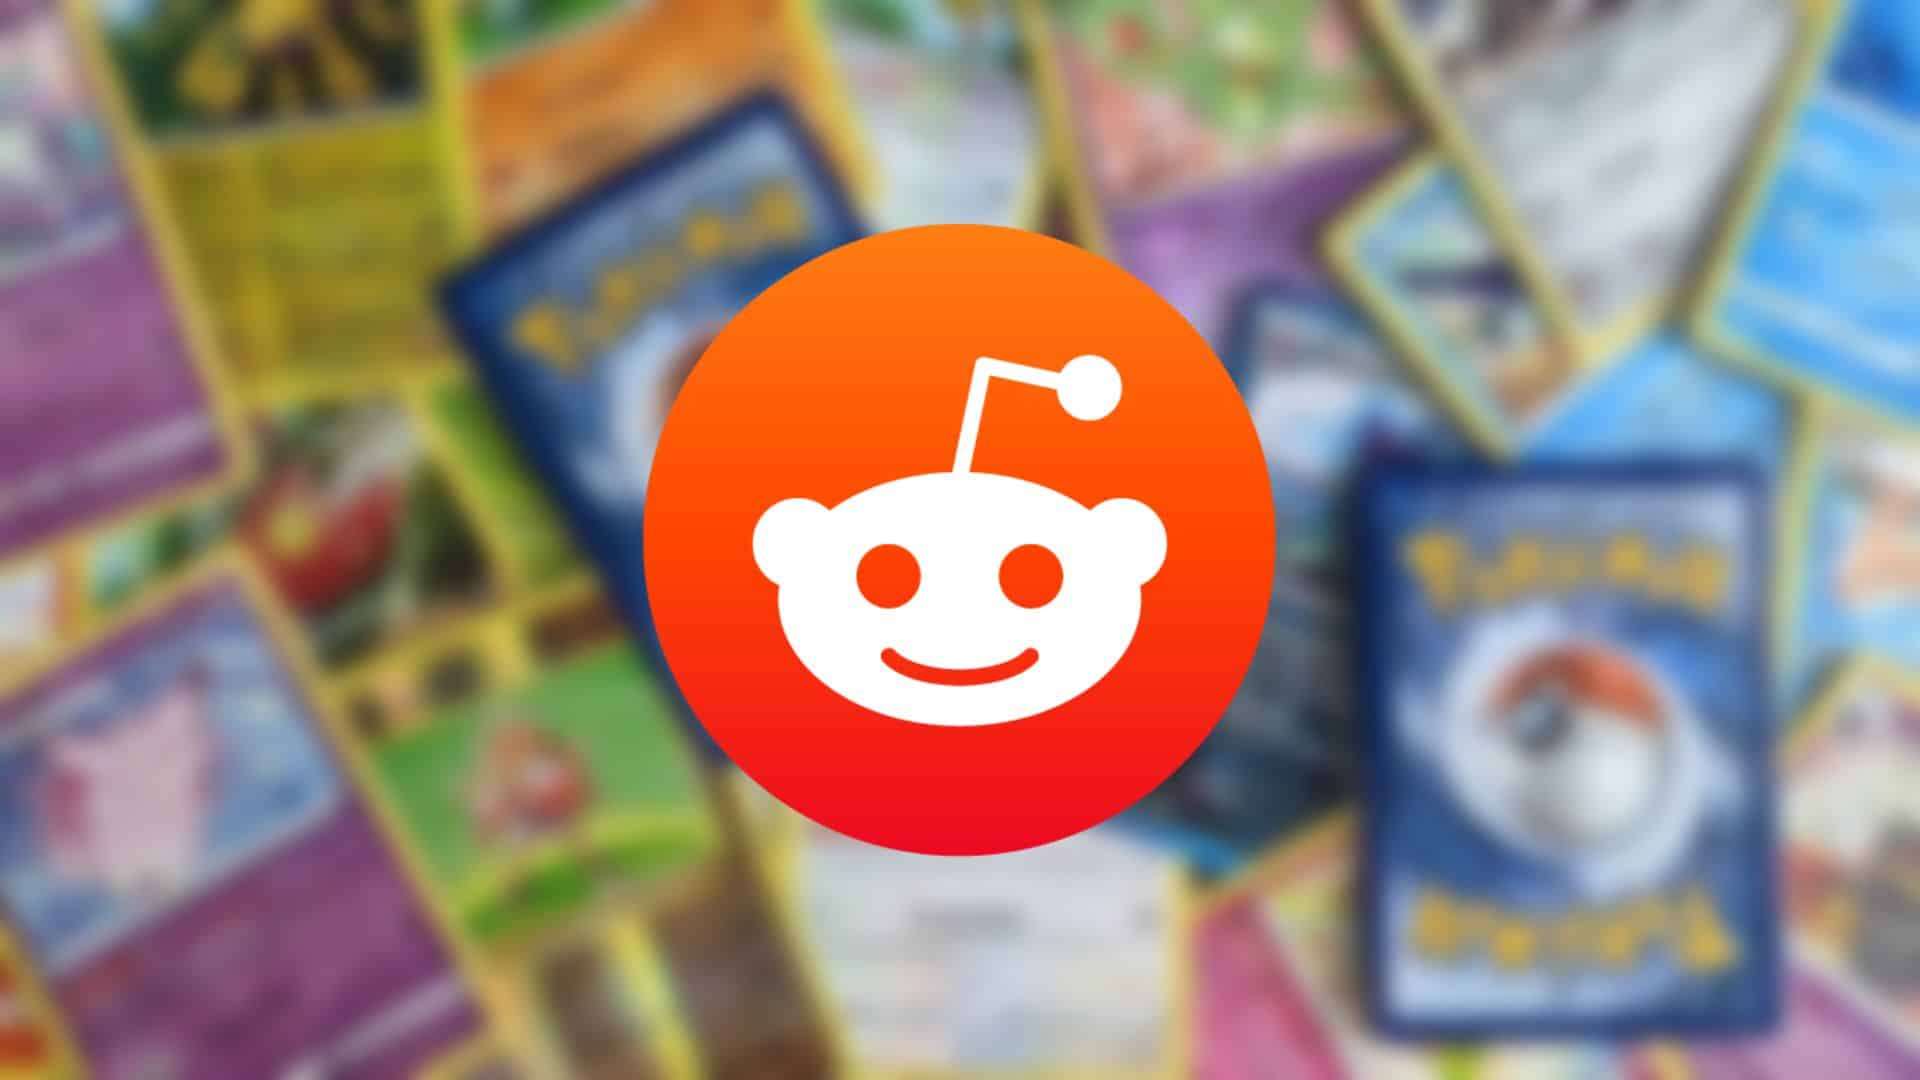 Pokemon cards and Reddit logo